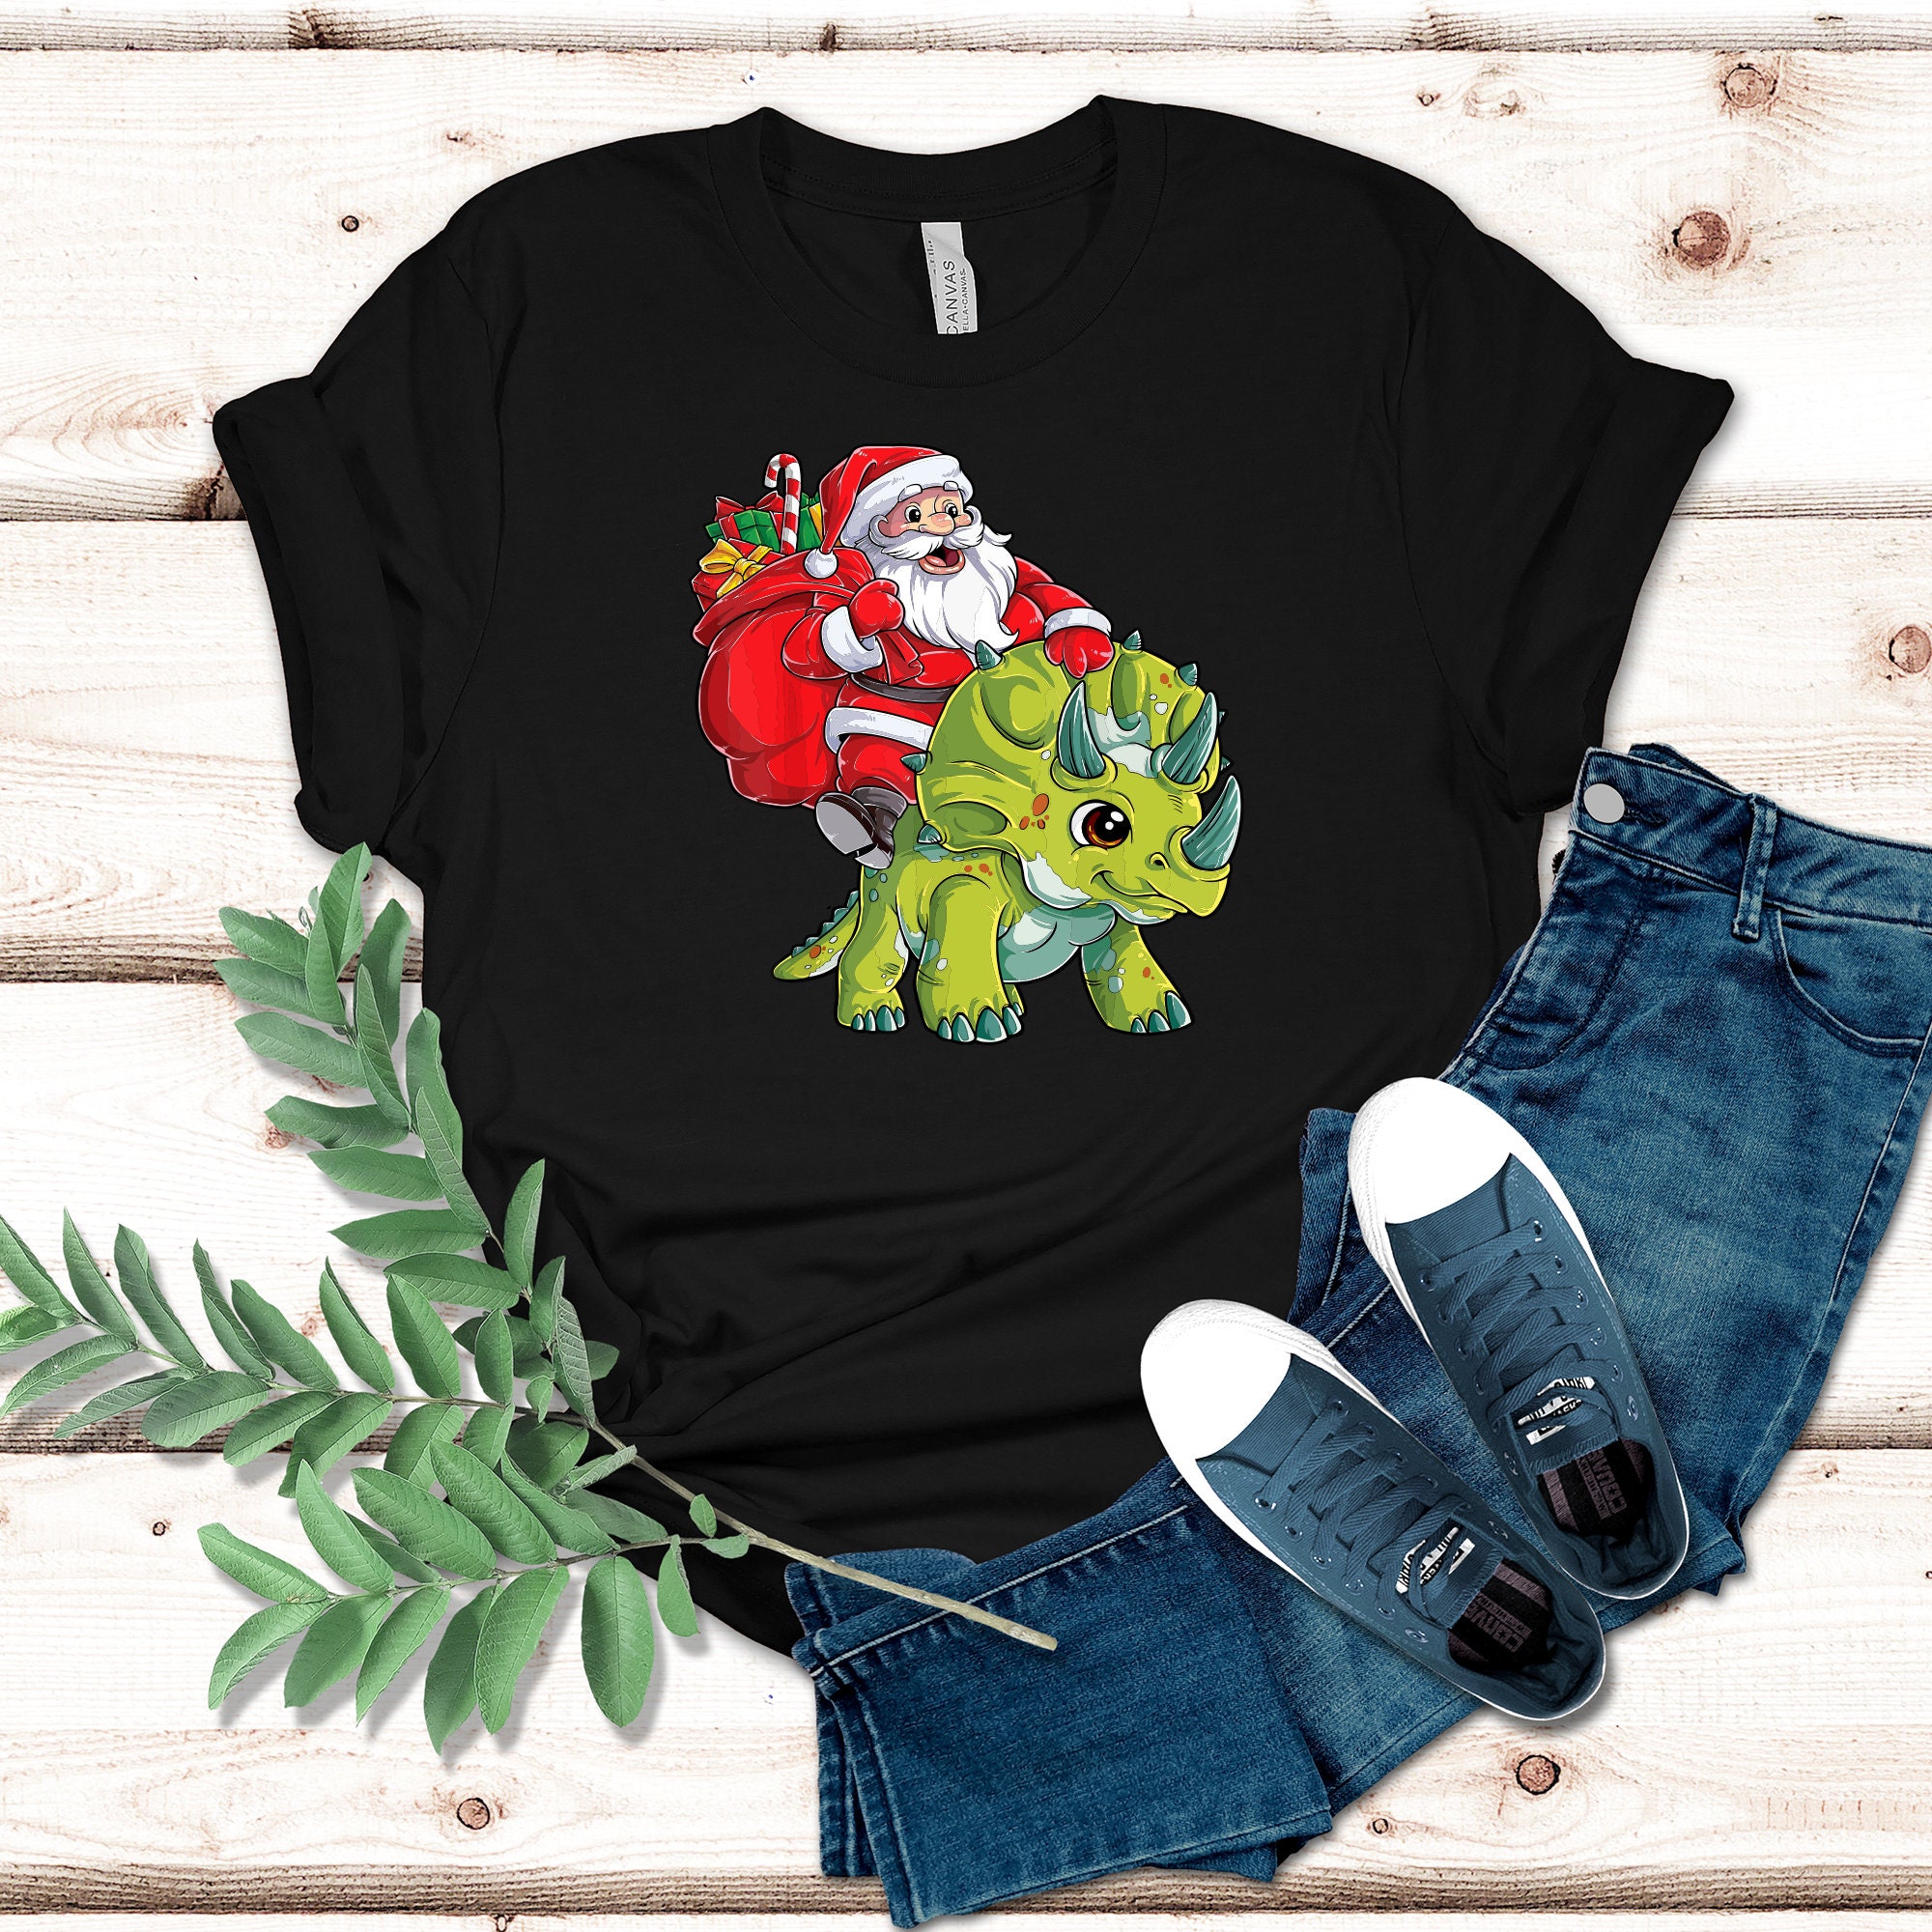 Discover Santa Triceratops Shirt For Kids, Christmas Santa Shirt, T-rex Dinosaur Outfit, Santa Snowflake Shirt, Dinosaur Tee For Boys, Christmas Gift